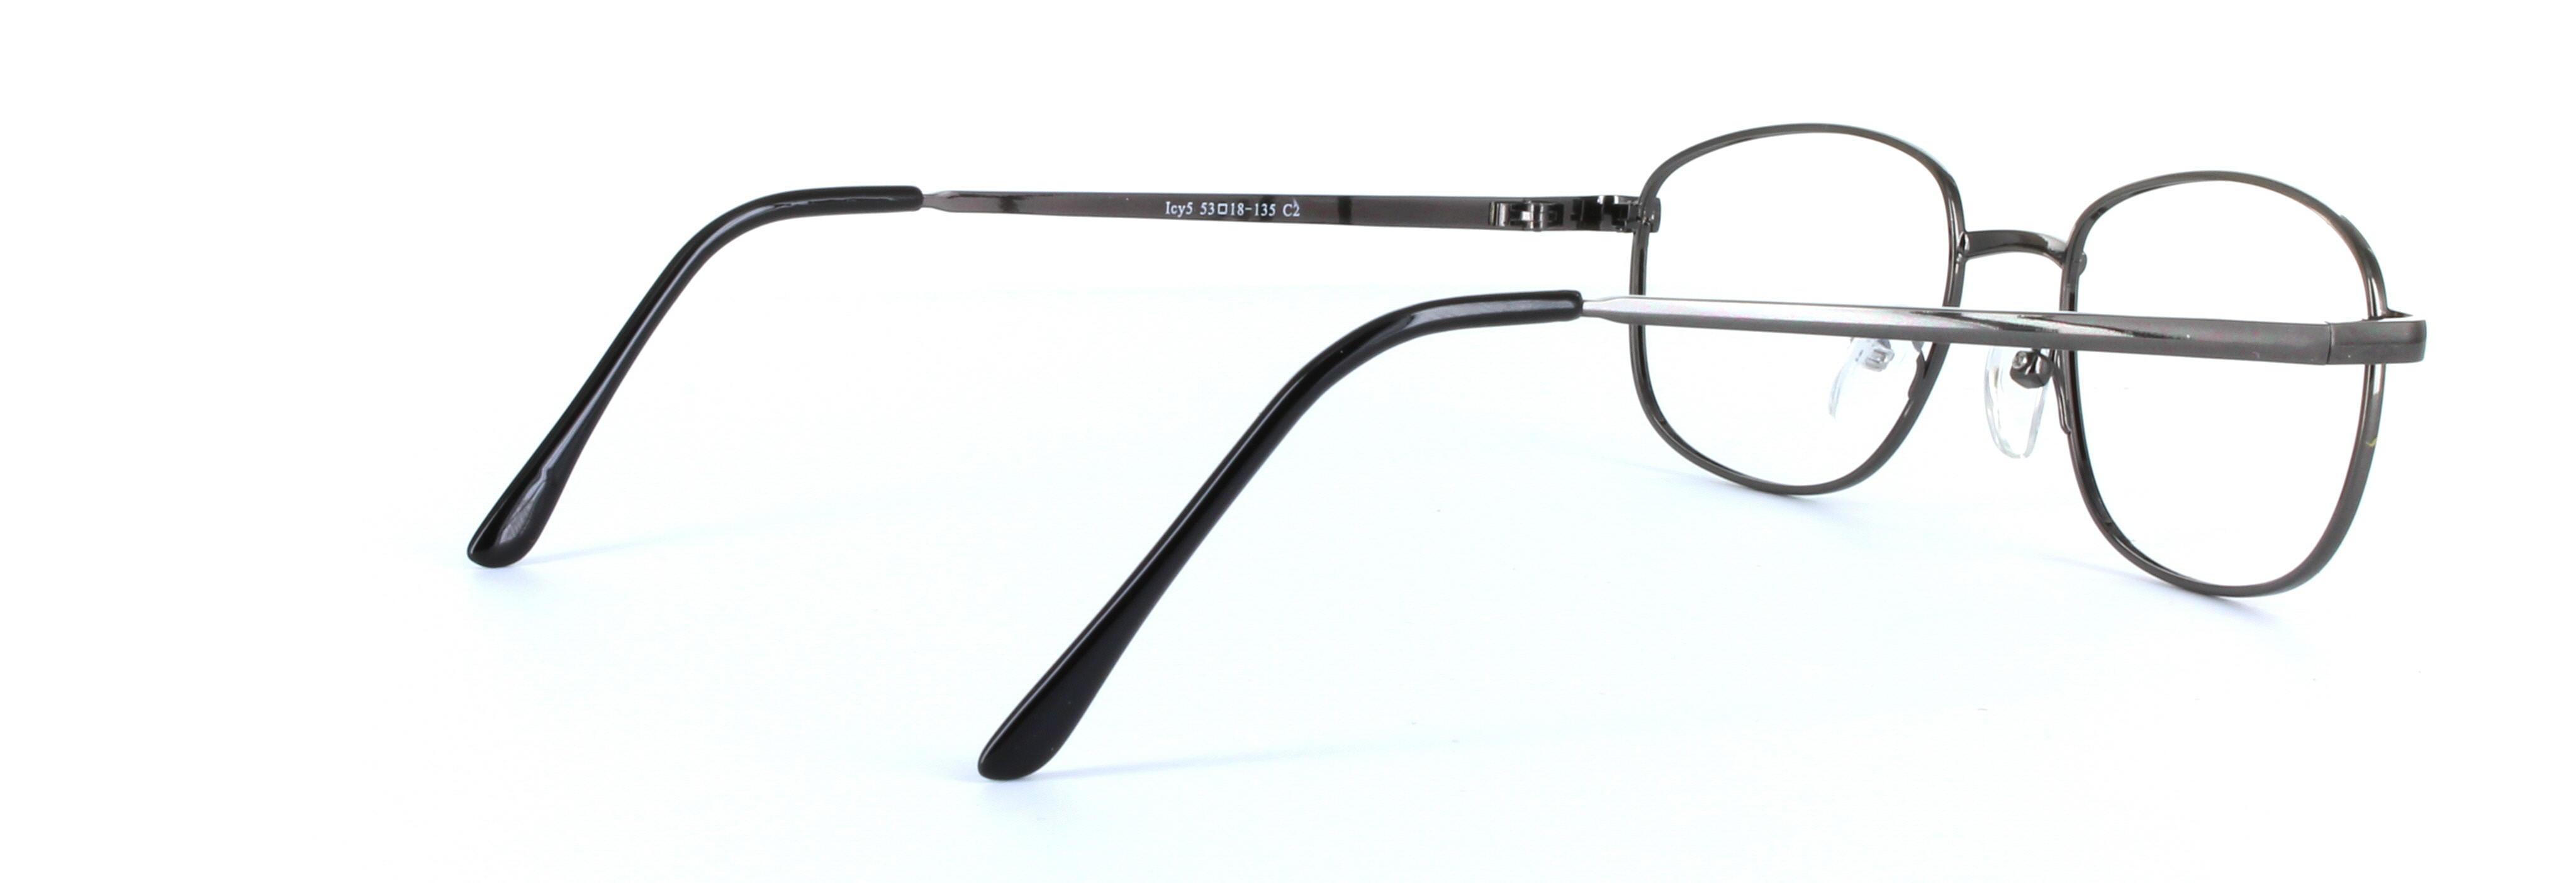 Ashton Gunmetal Full Rim Rectangular Metal Glasses - Image View 4